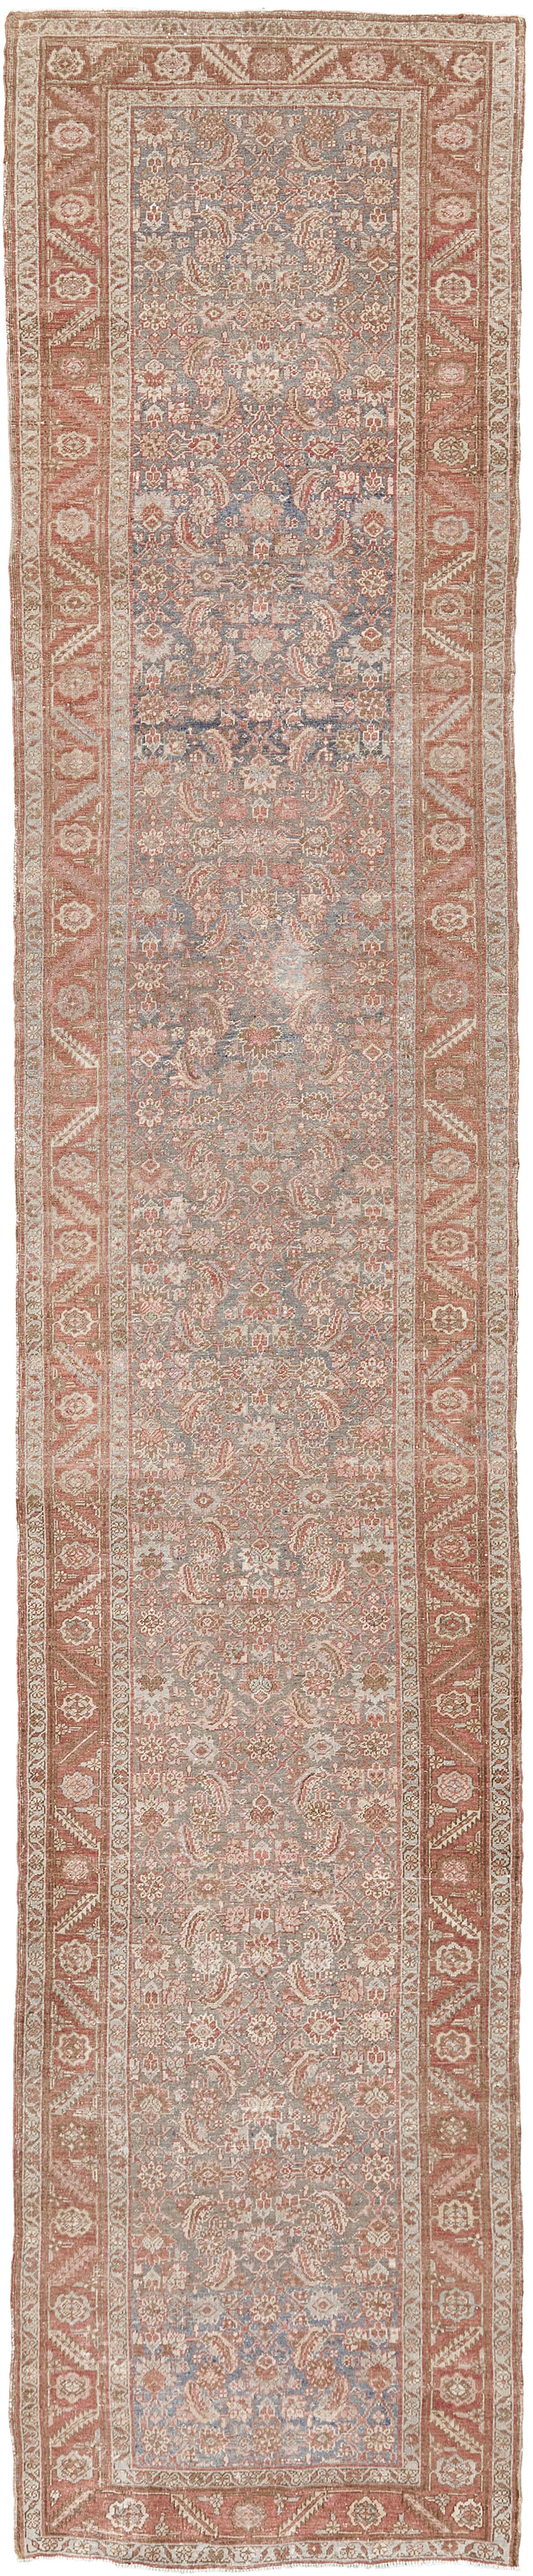 Antique Persian Bakhsyayesh 30154